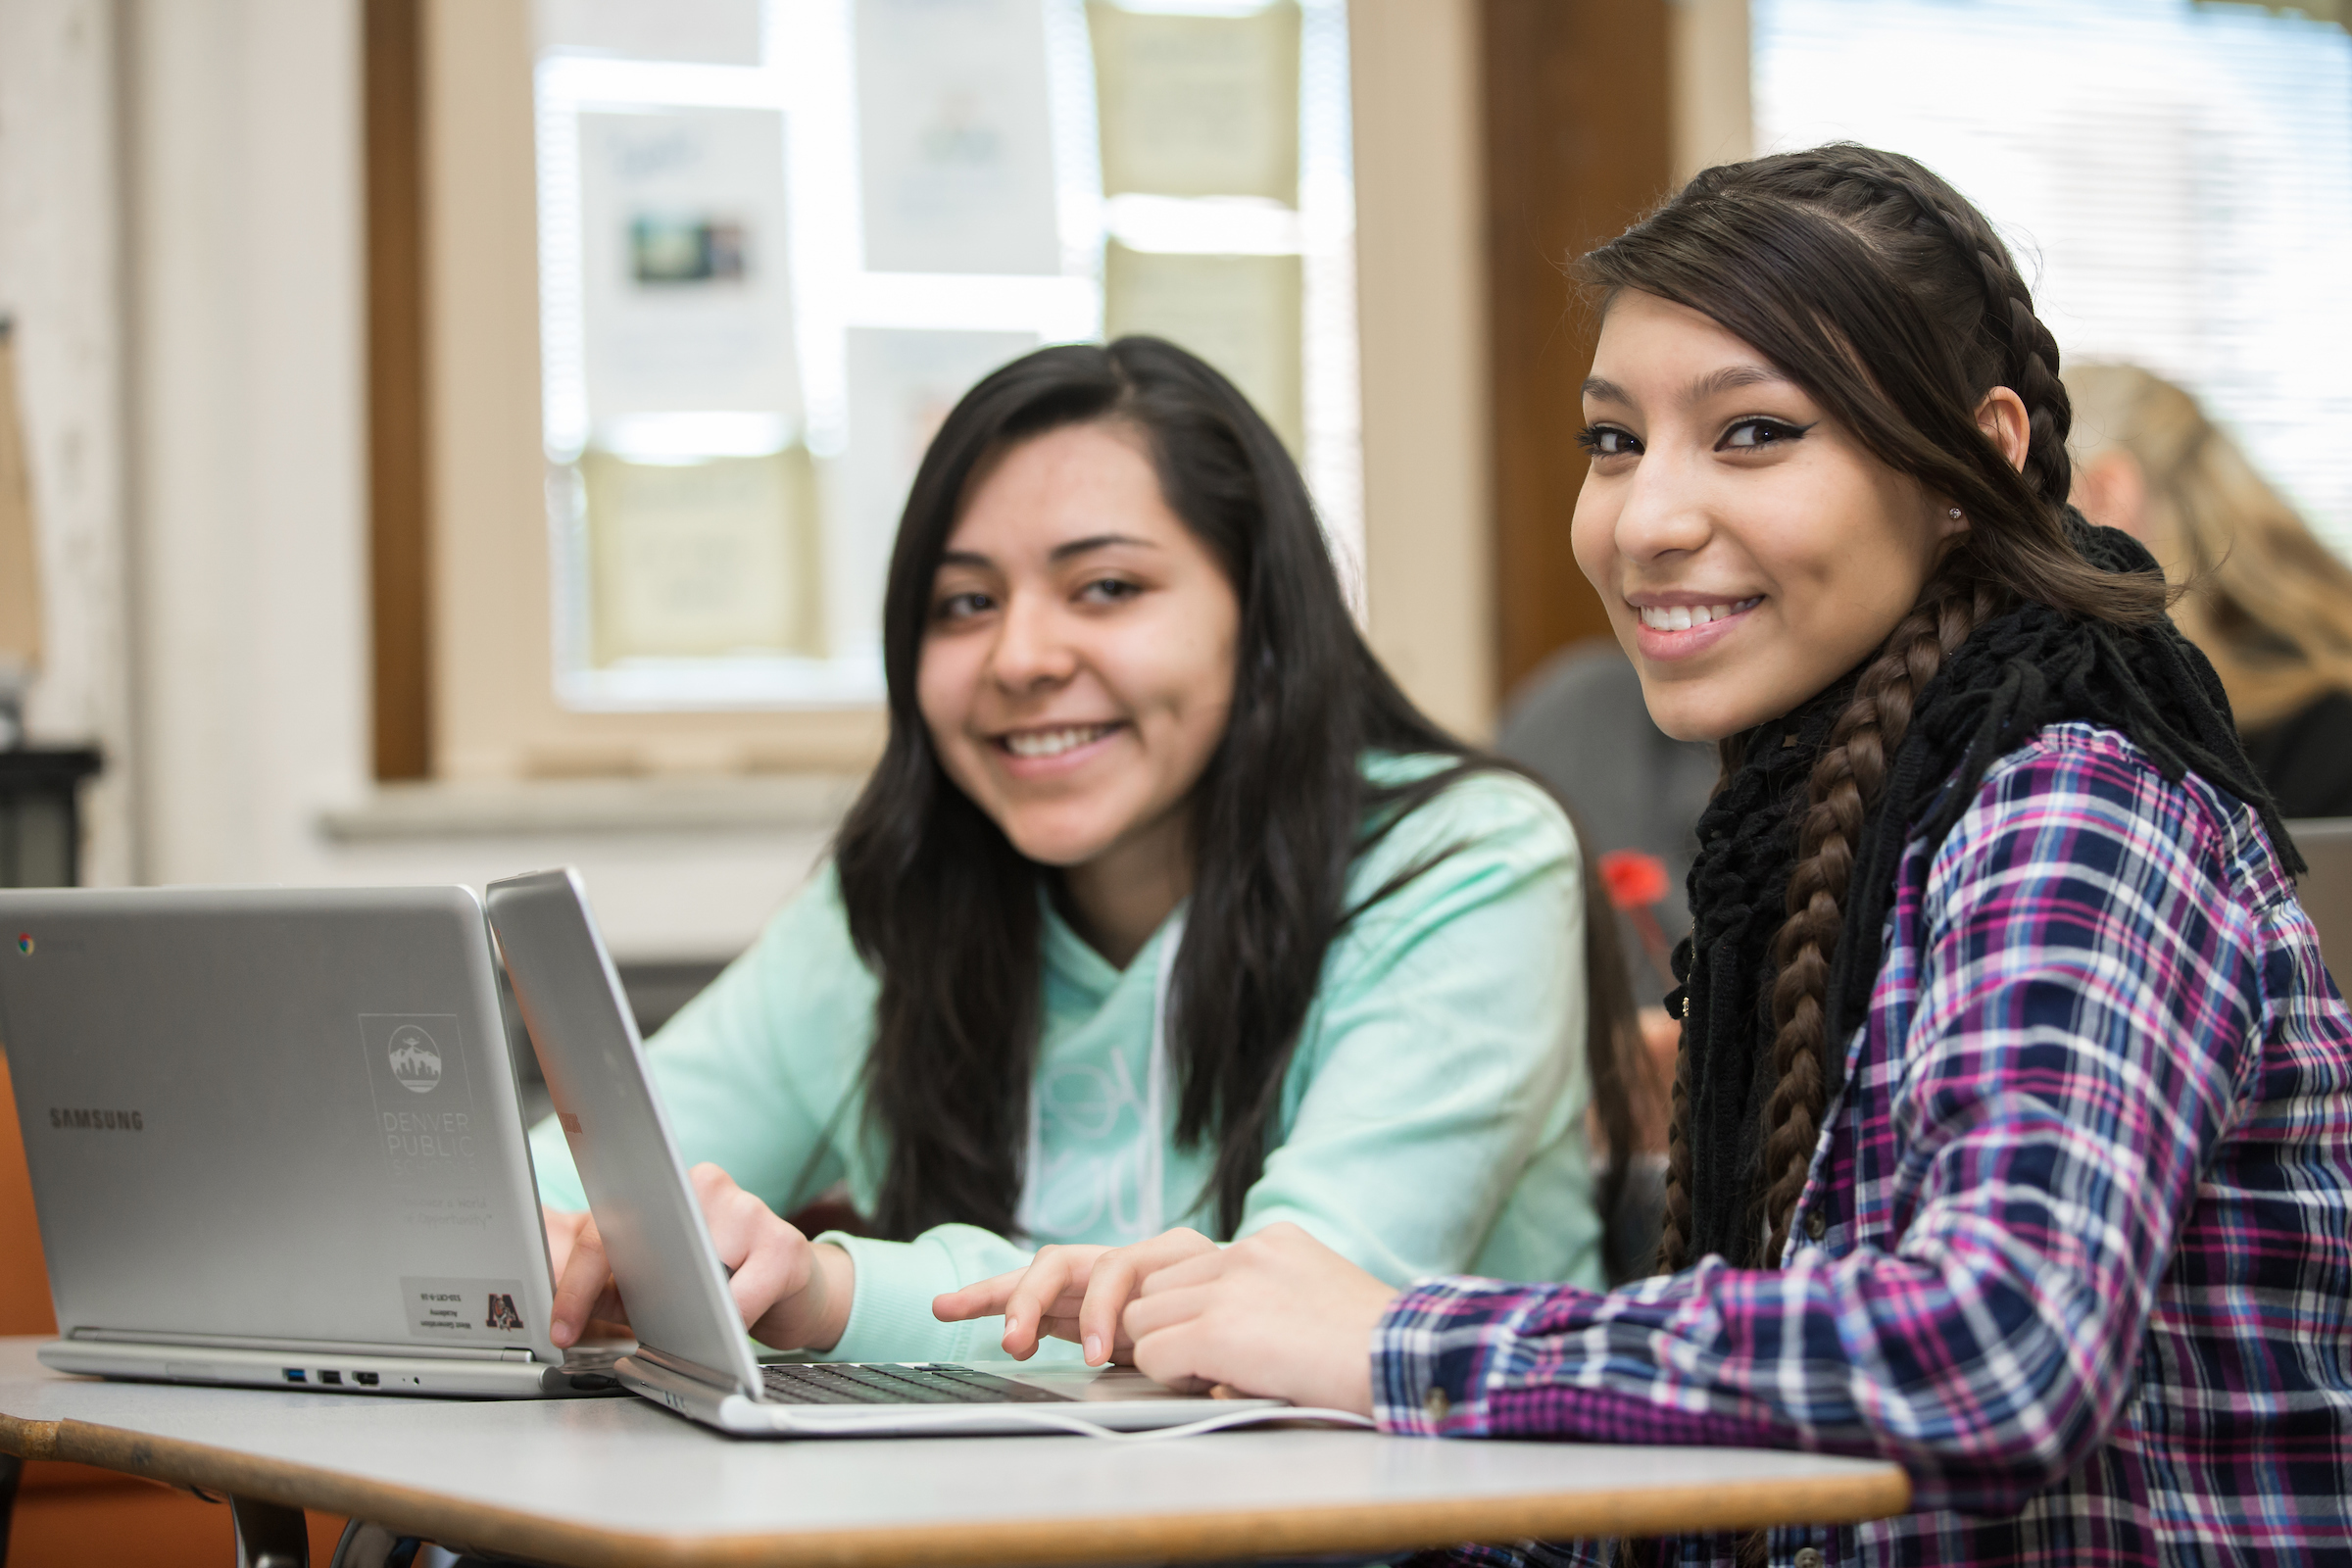 Two teen girls smiling while using laptop